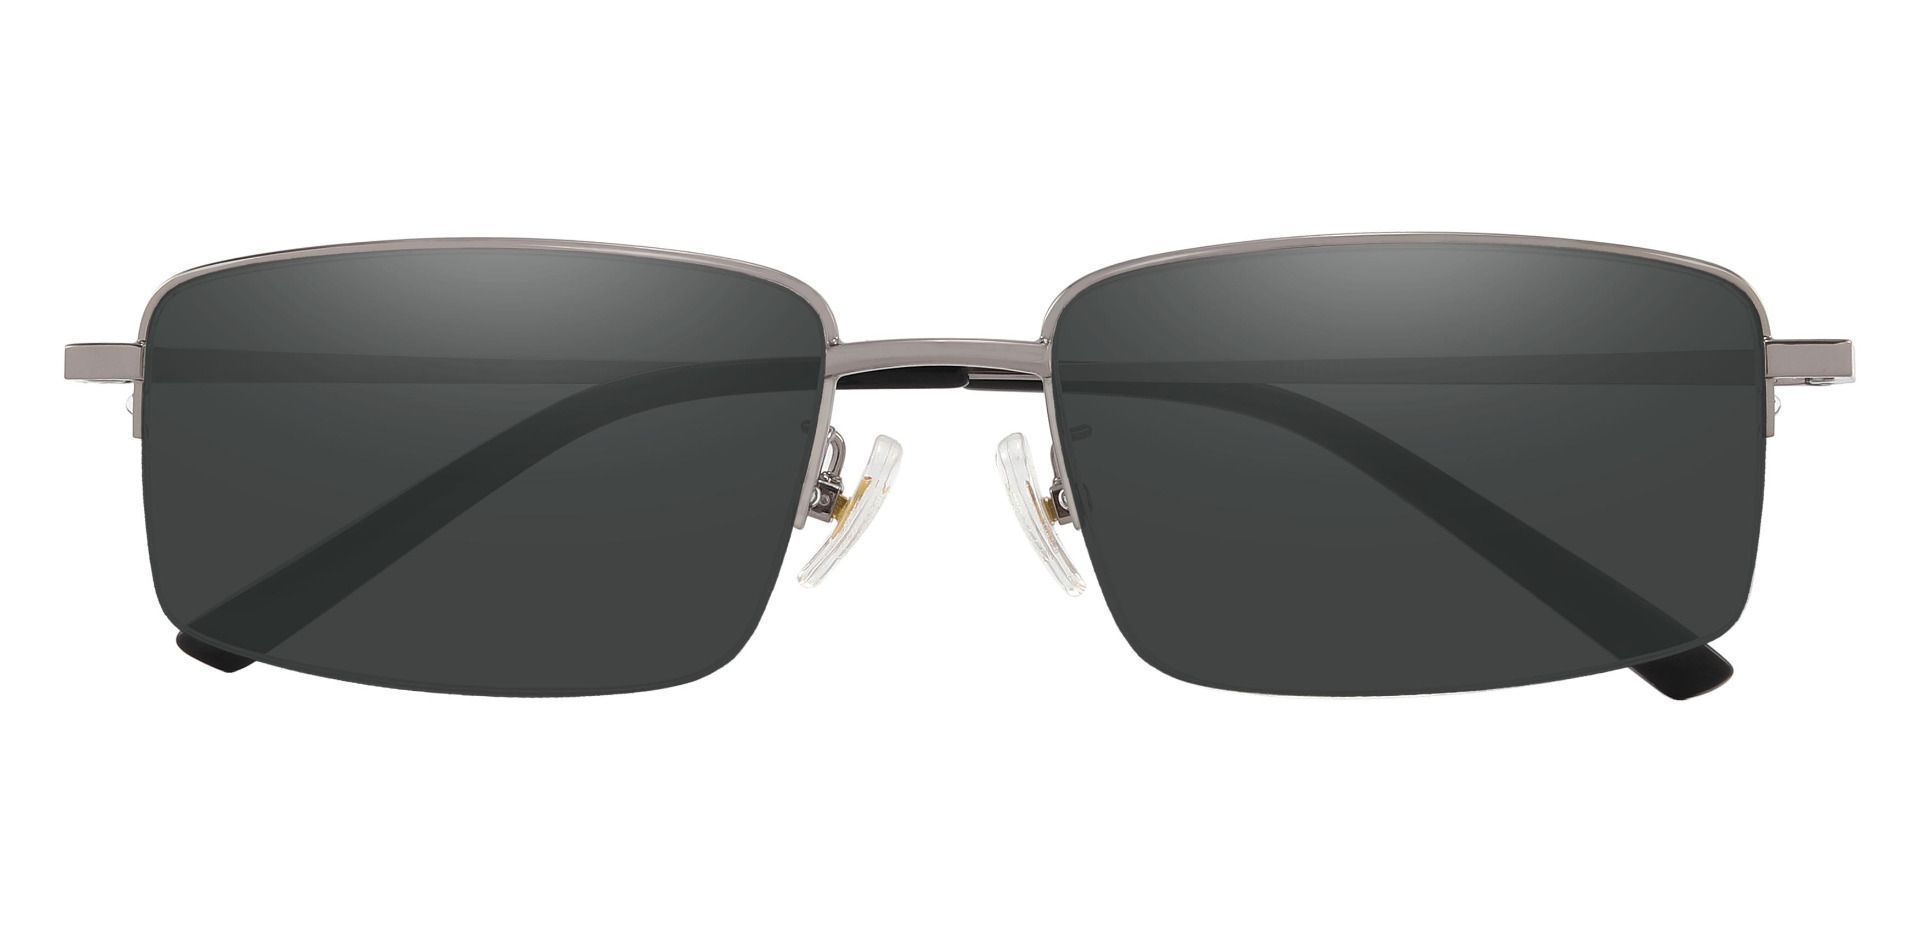 Wayne Rectangle Progressive Sunglasses - Gray Frame With Gray Lenses